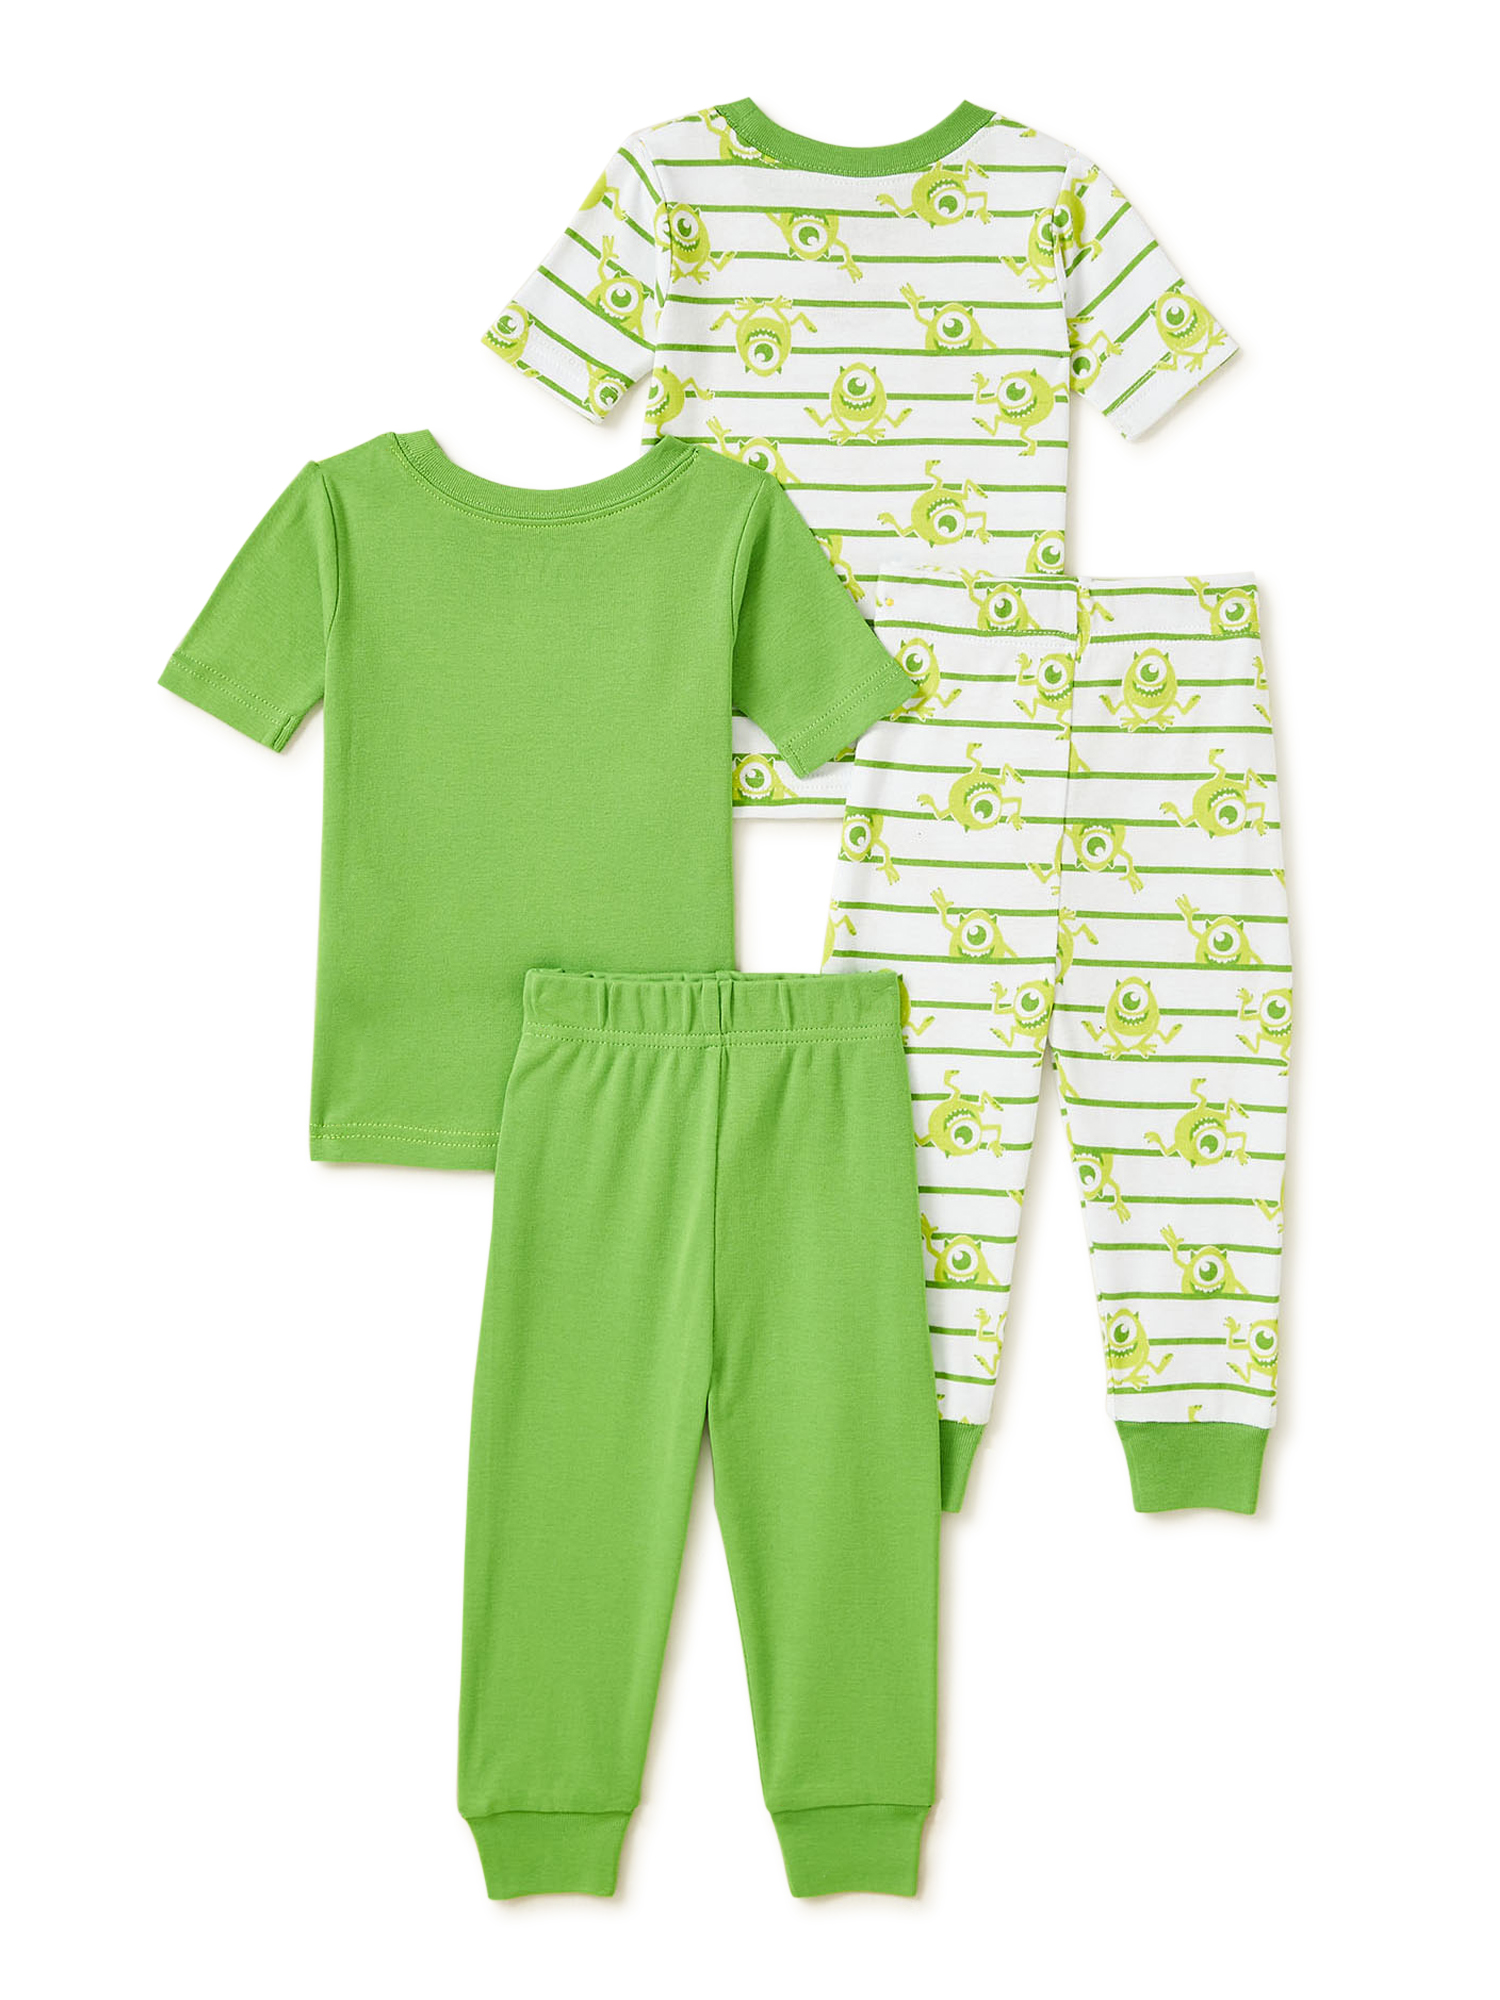 Monsters Inc. Toddler Boys Snug Fit Cotton Short Sleeve T-Shirt & Pants, 4-Piece Pajama Set, Sizes 9M-24M - image 2 of 3